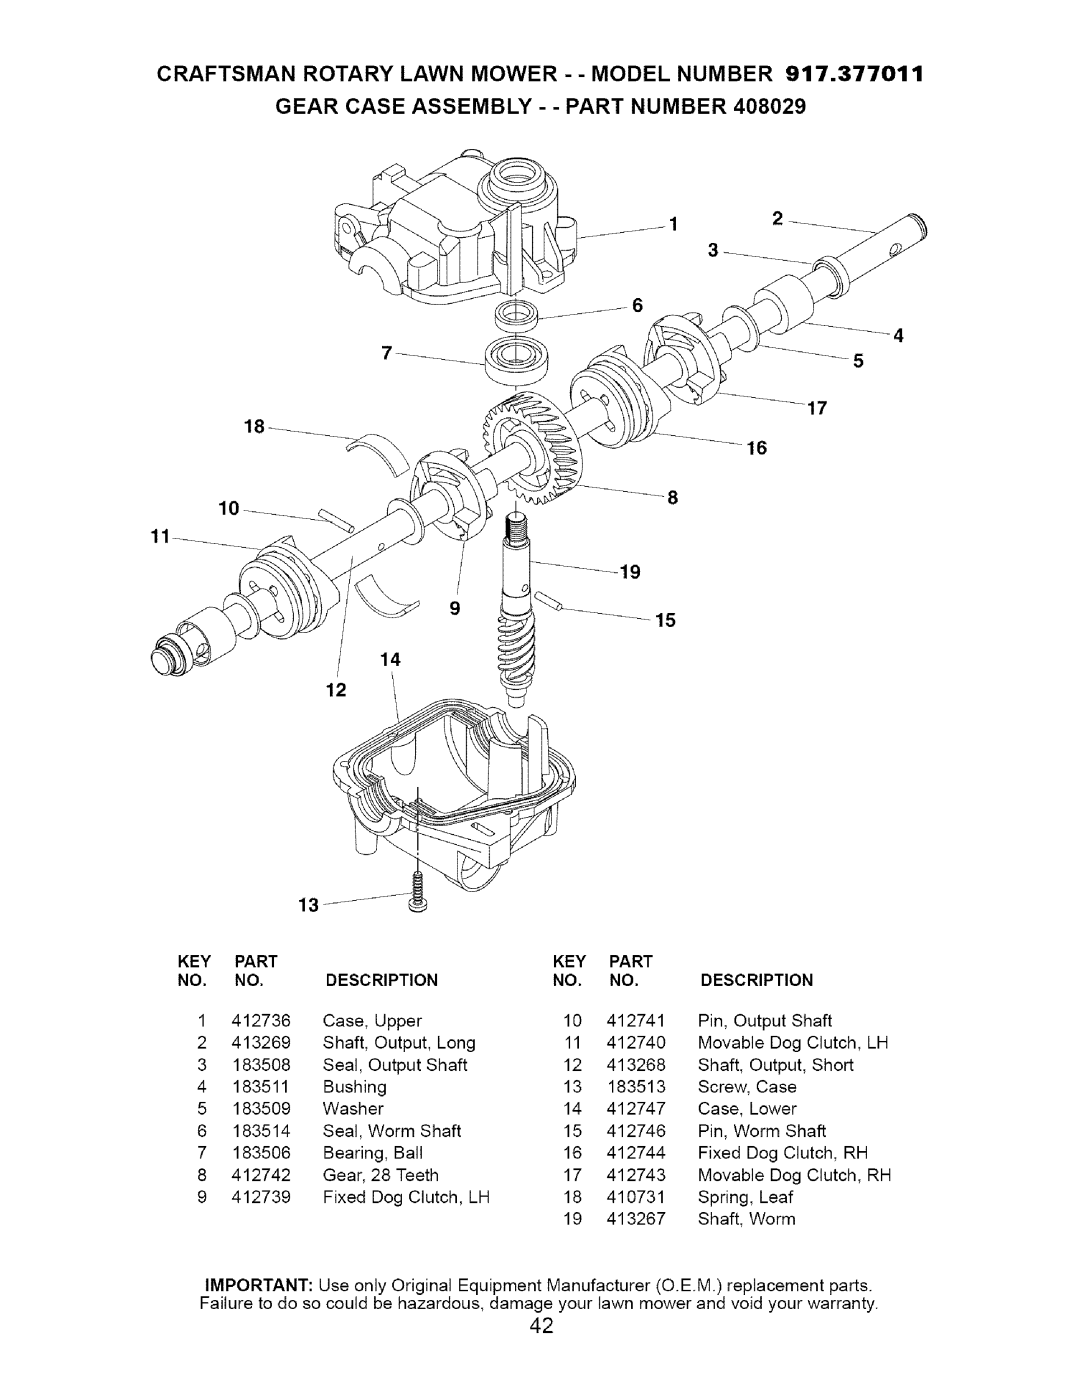 Craftsman 917.377011 owner manual Gear Case Assembly - - Part Number, 14 12 